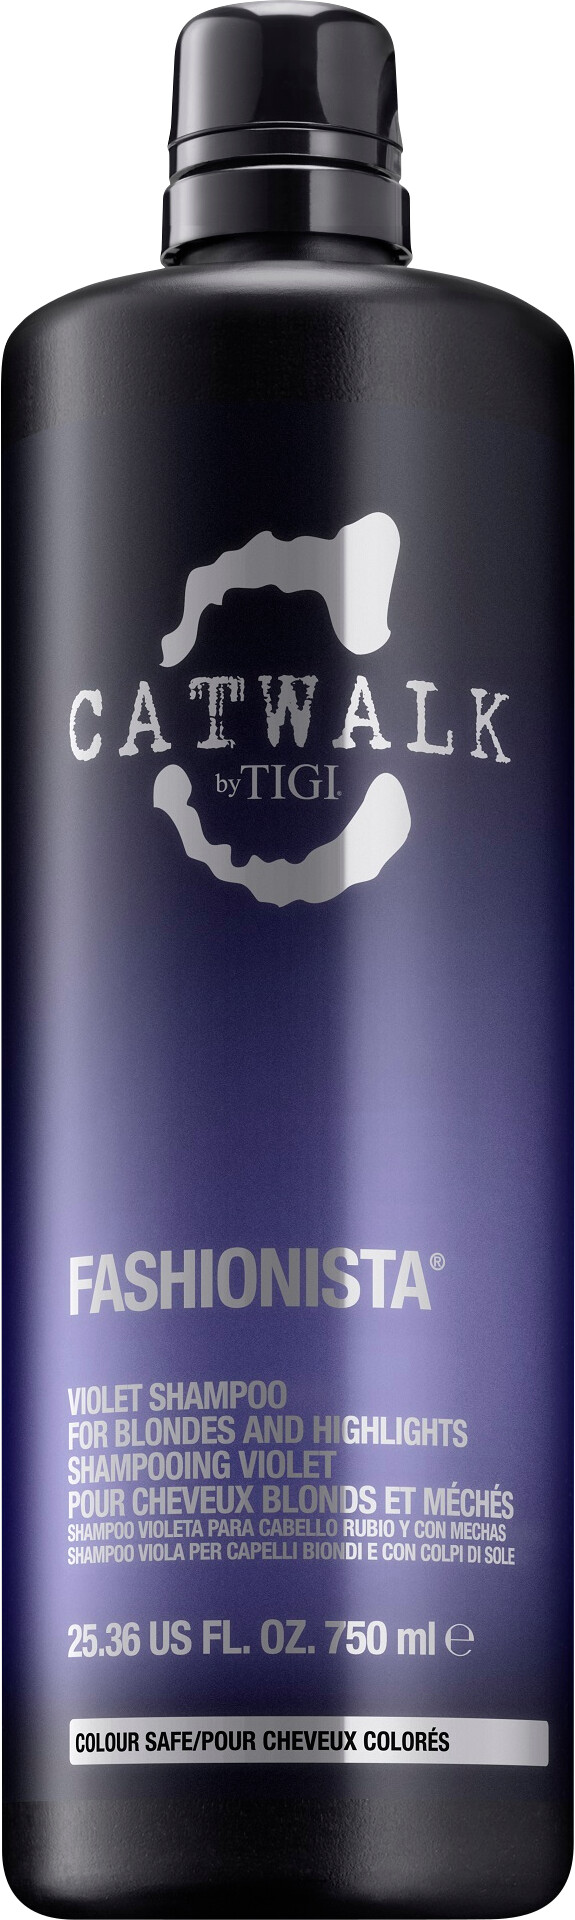 TIGI Catwalk Fashionista Violet Shampoo 750ml